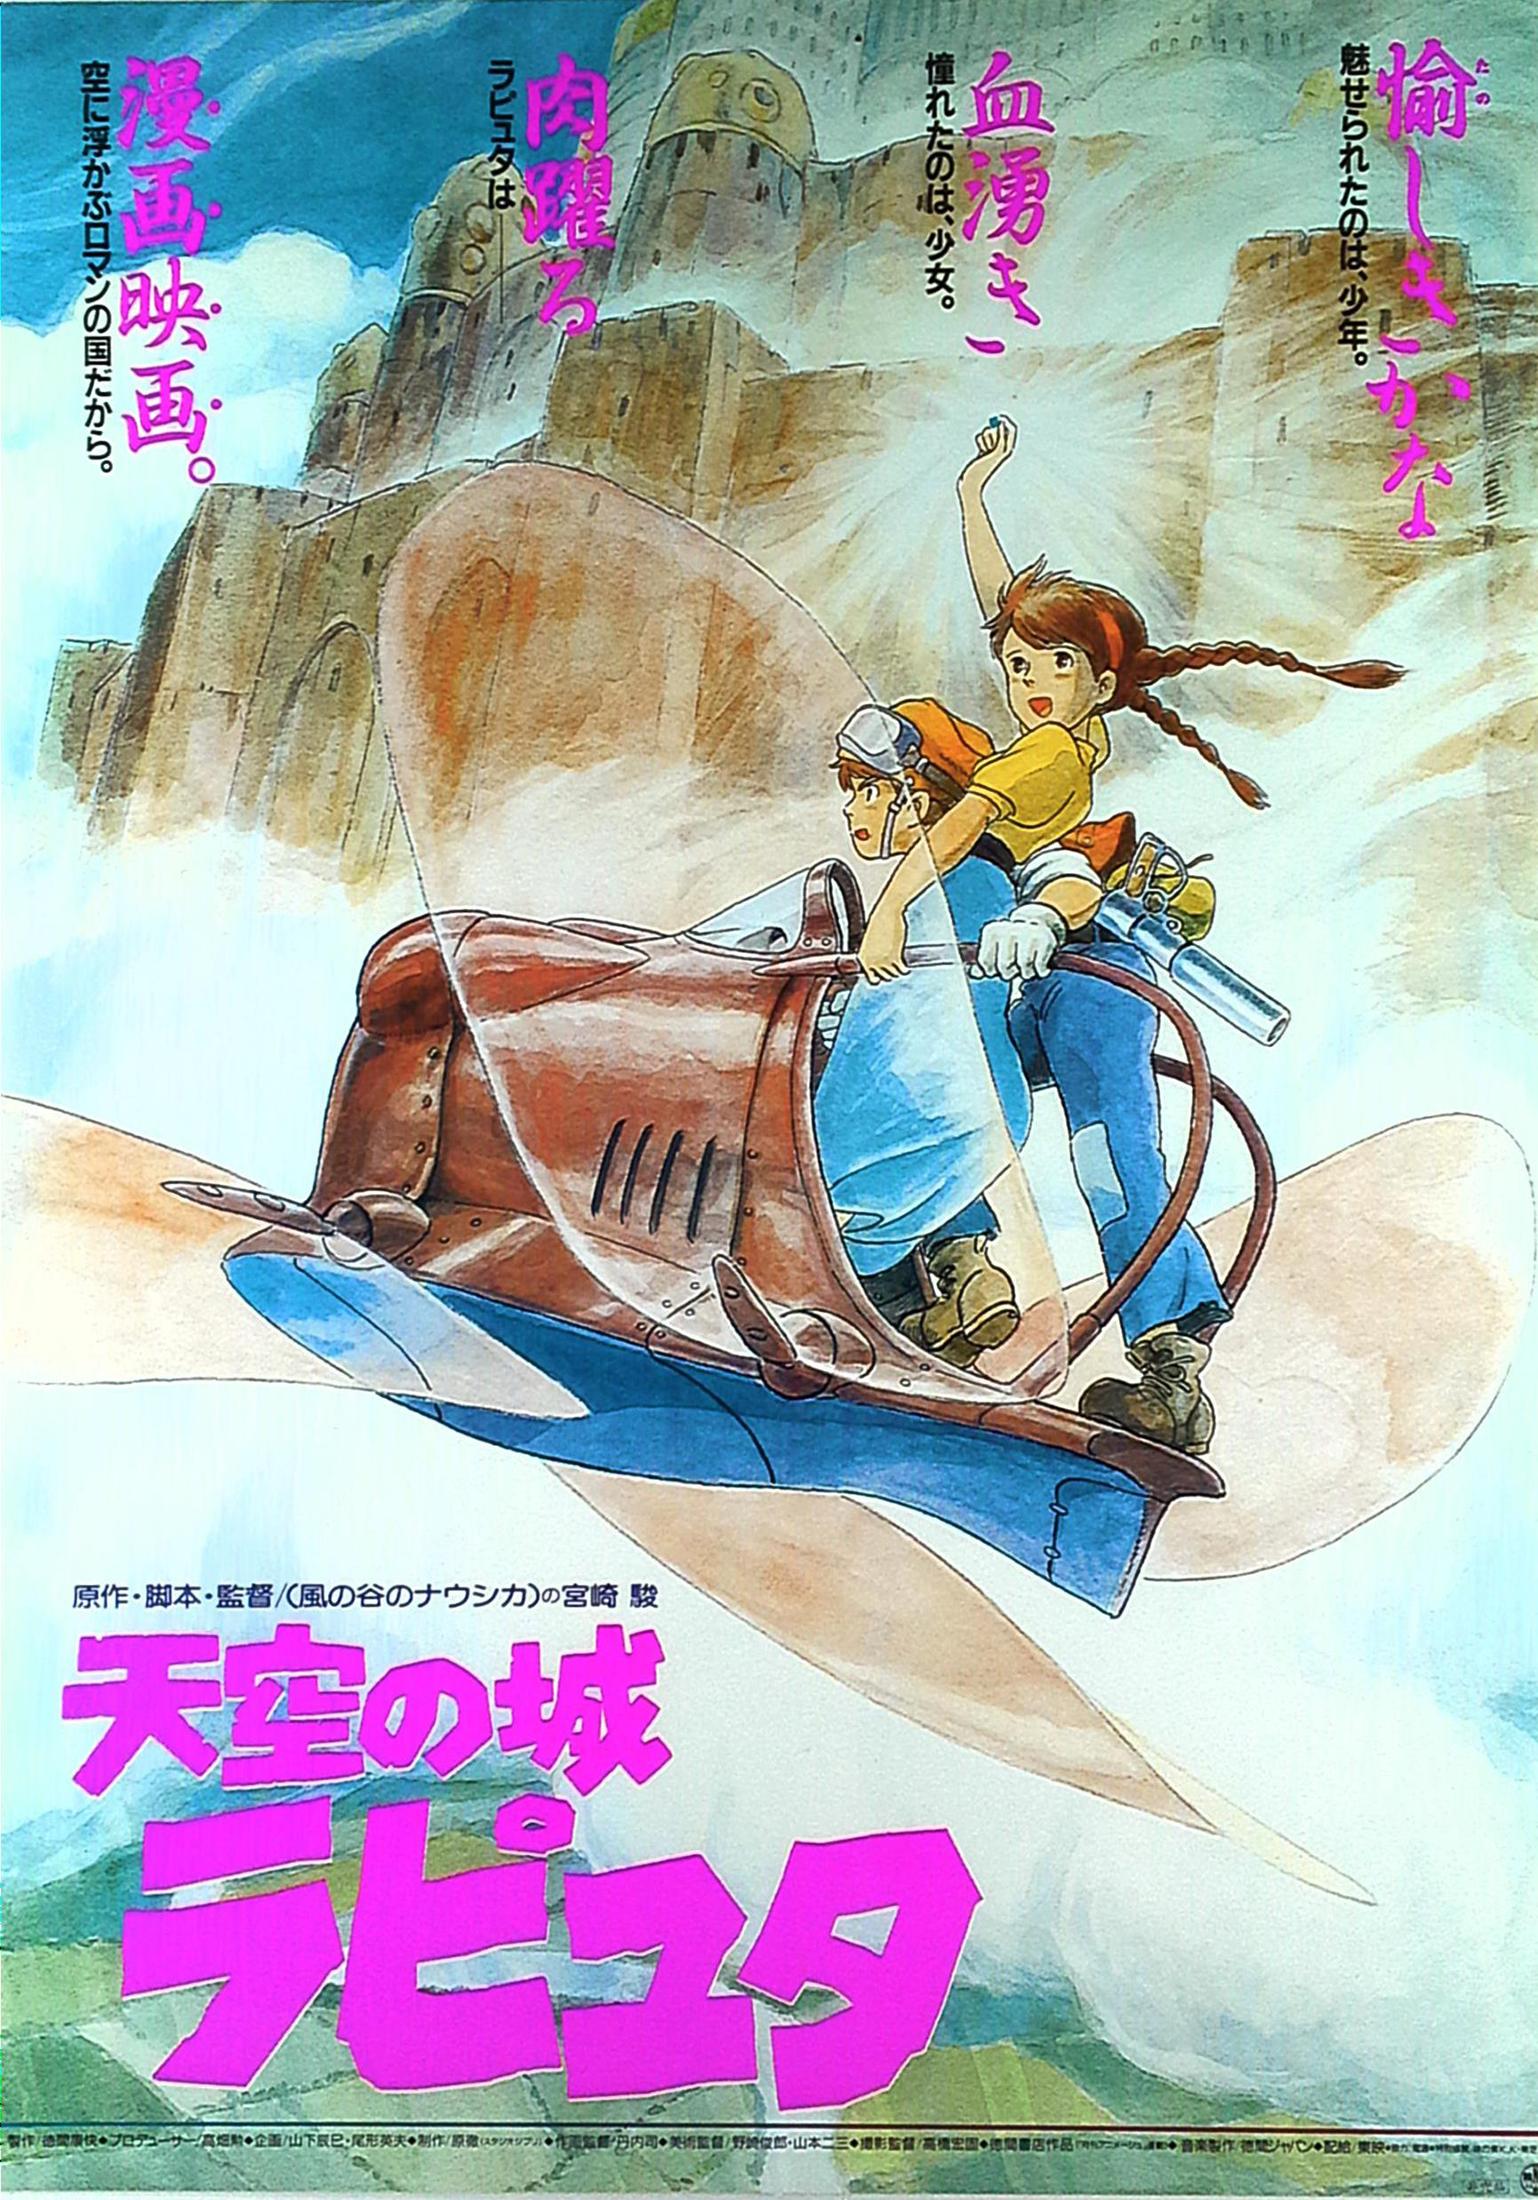 Laputa: Castle in the Sky Original Vintage Poster, Studio Ghibli Movie, 1986 - Gray Print by Unknown